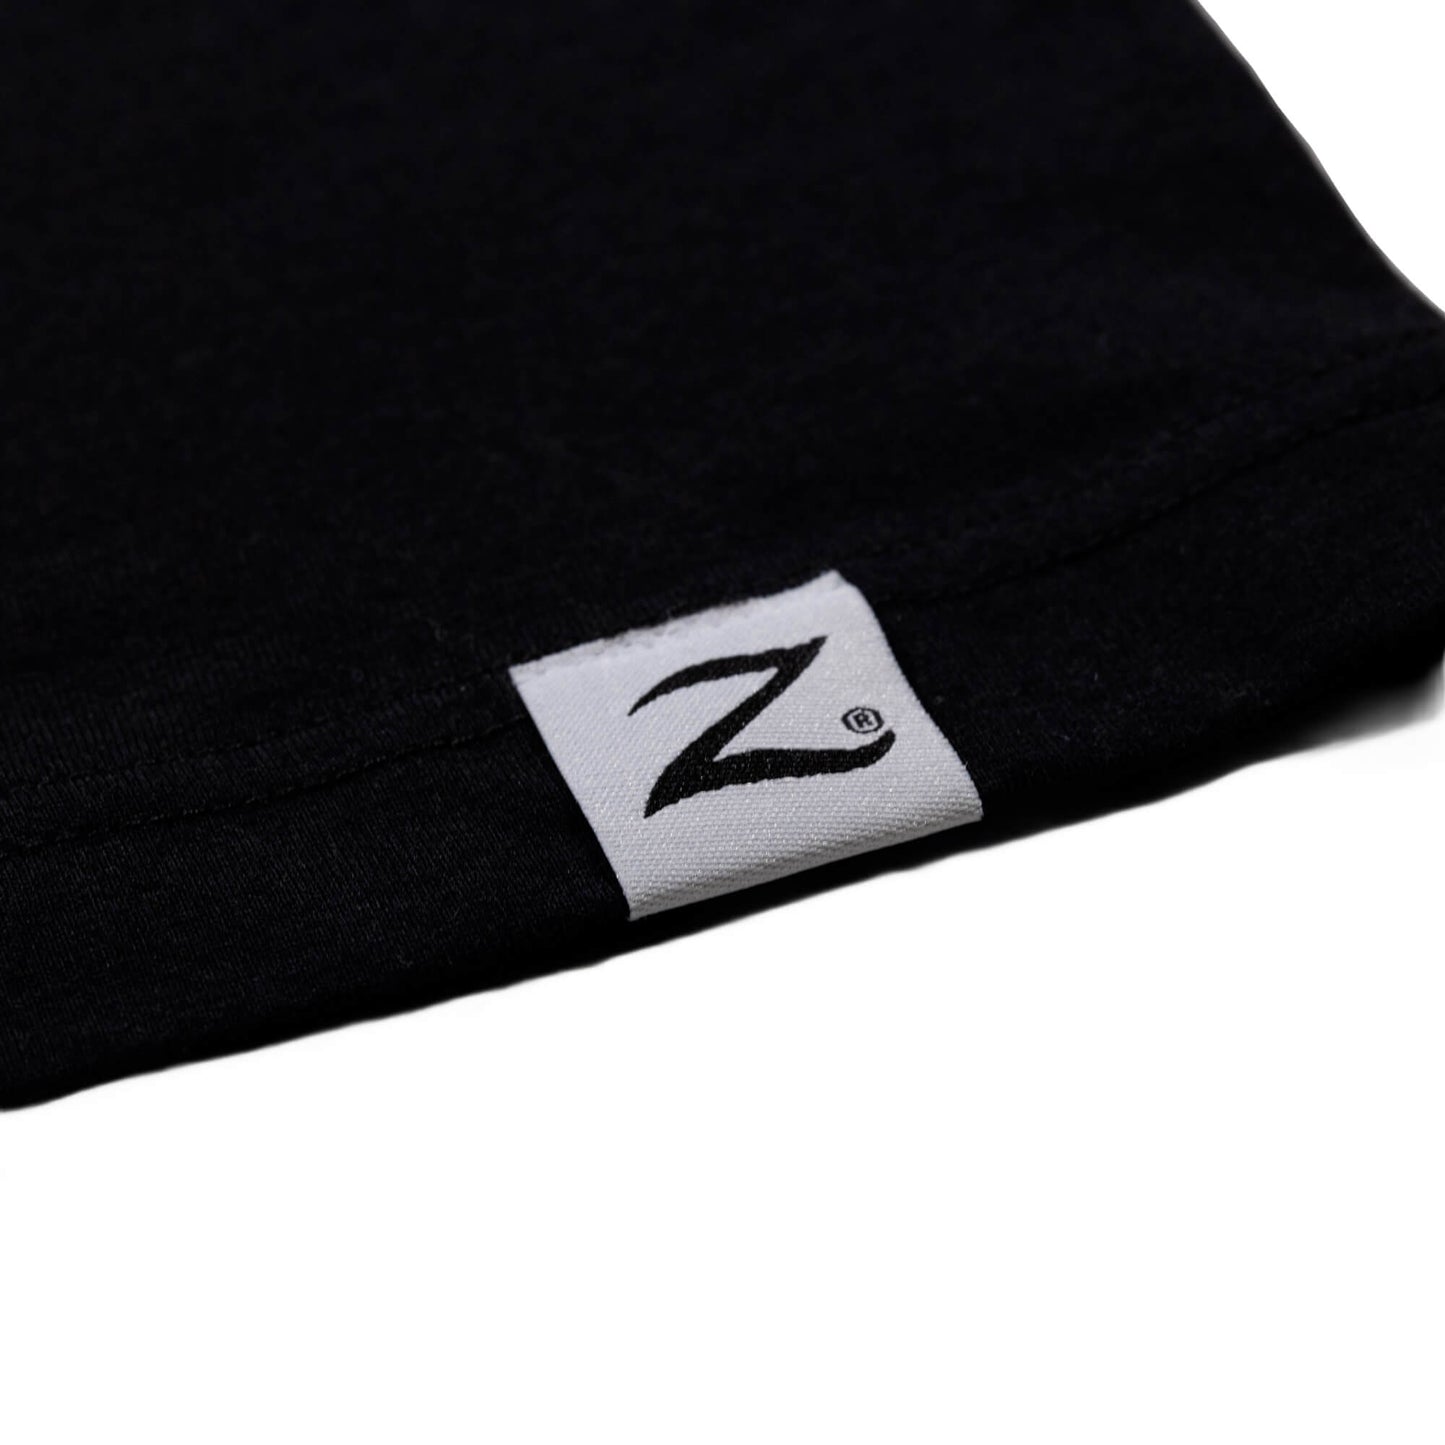 Zildjian Limited Edition Z Custom Black T-Shirt